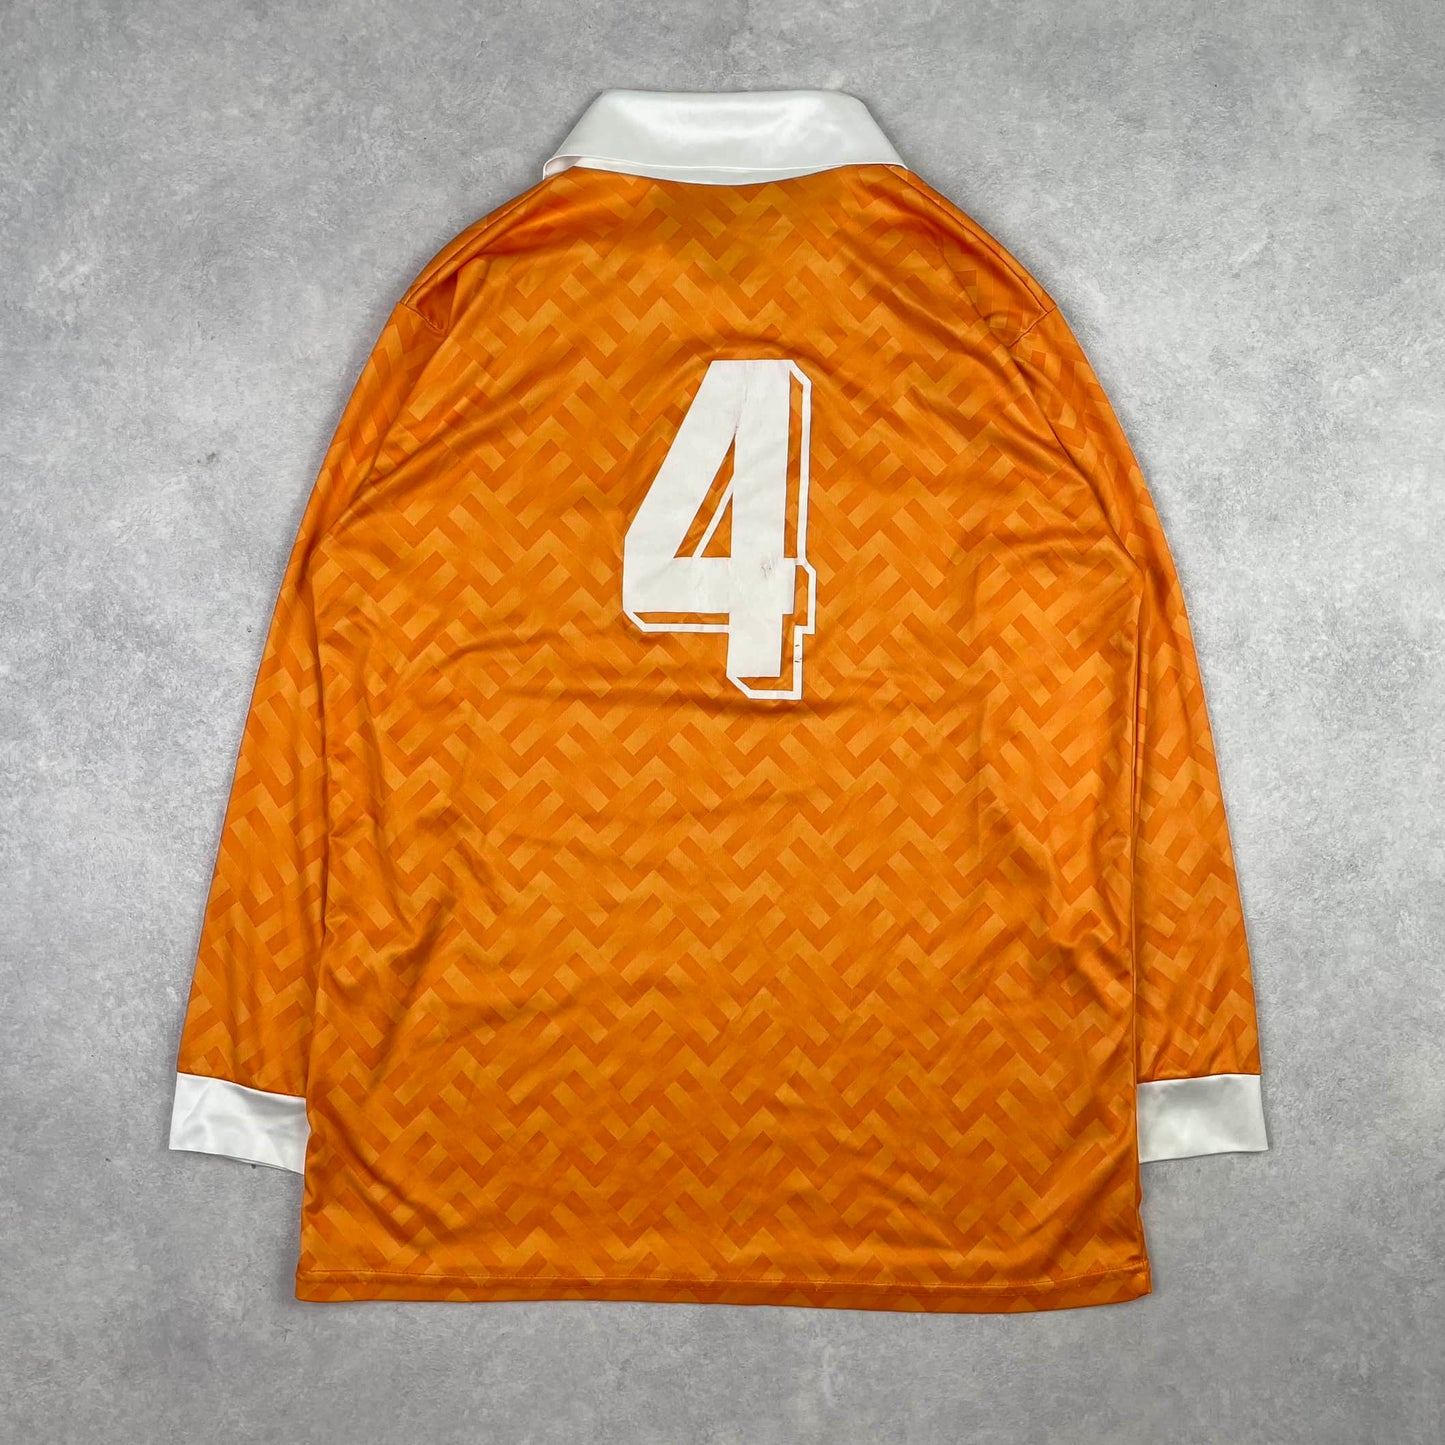 Vintage Italian Soccer Shirt Orange